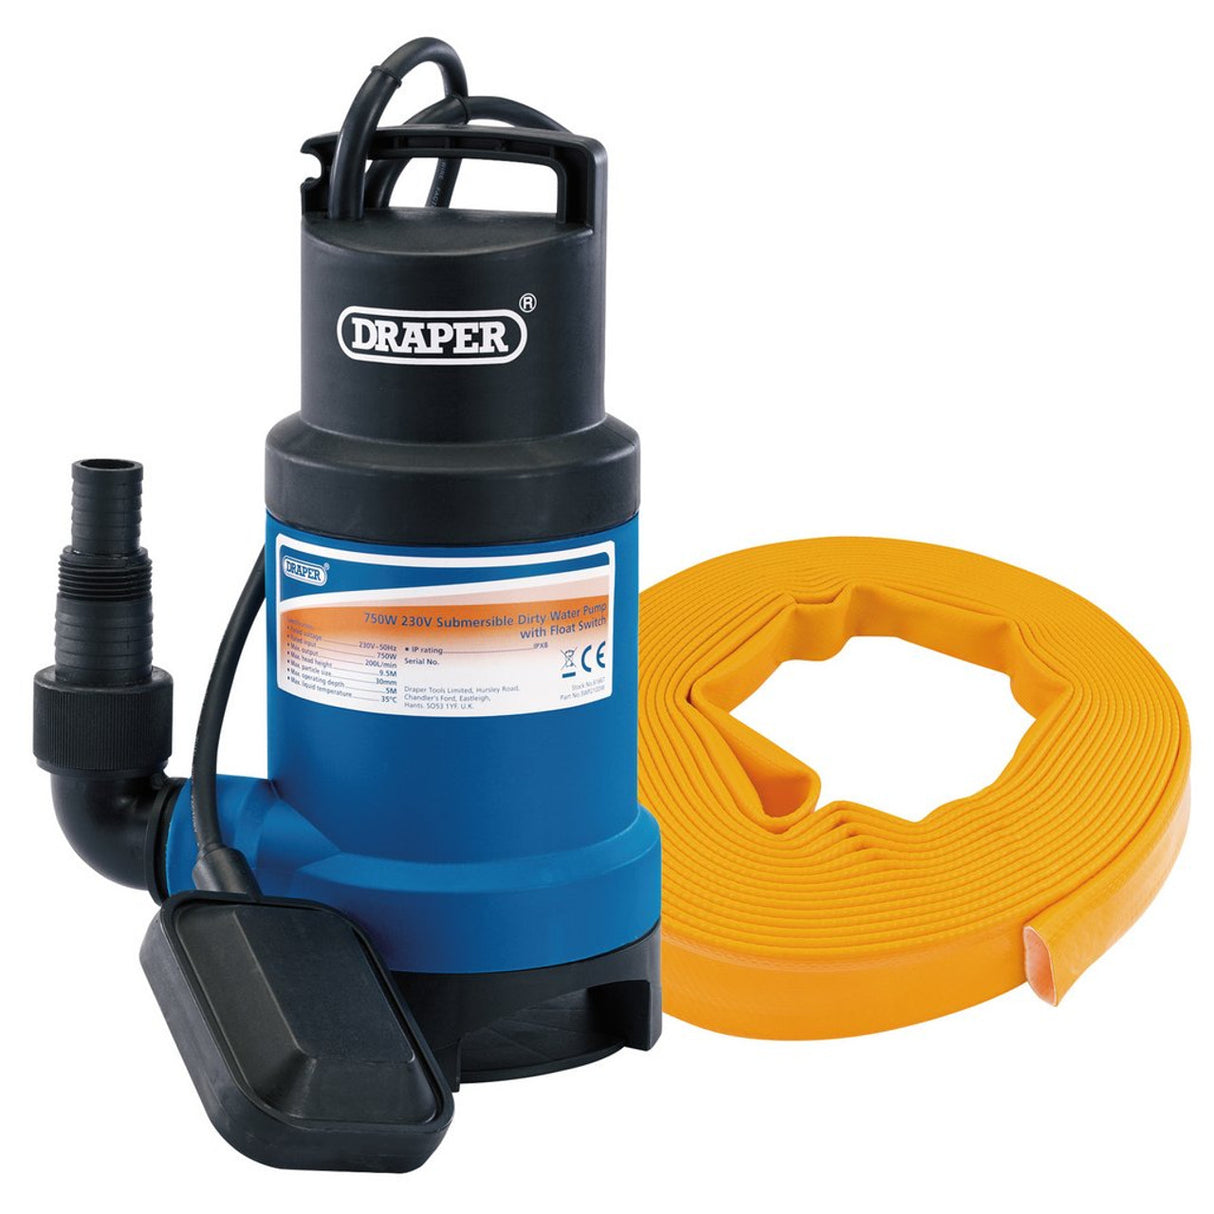 Draper Tools Submersible Dirty Water Pump Kit With Lay-flat Hose & Adaptor, 200L/Min, 10M x 25mm, 350W